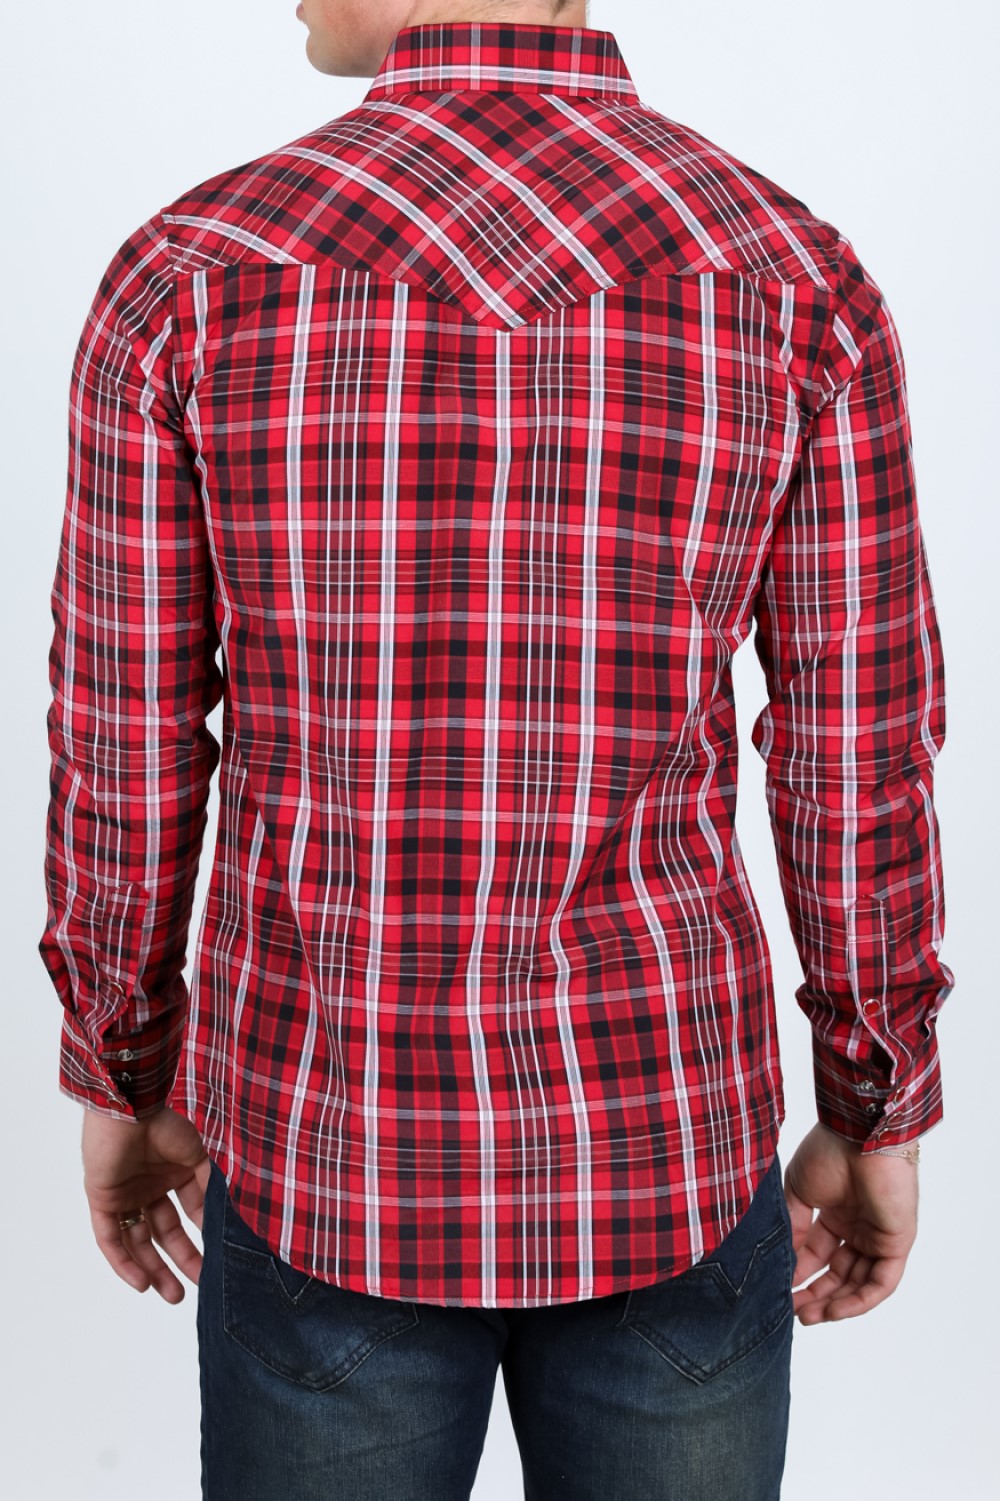 Plaid Shirt MC-200-50 - Long Sleeve Western Shirts for Men